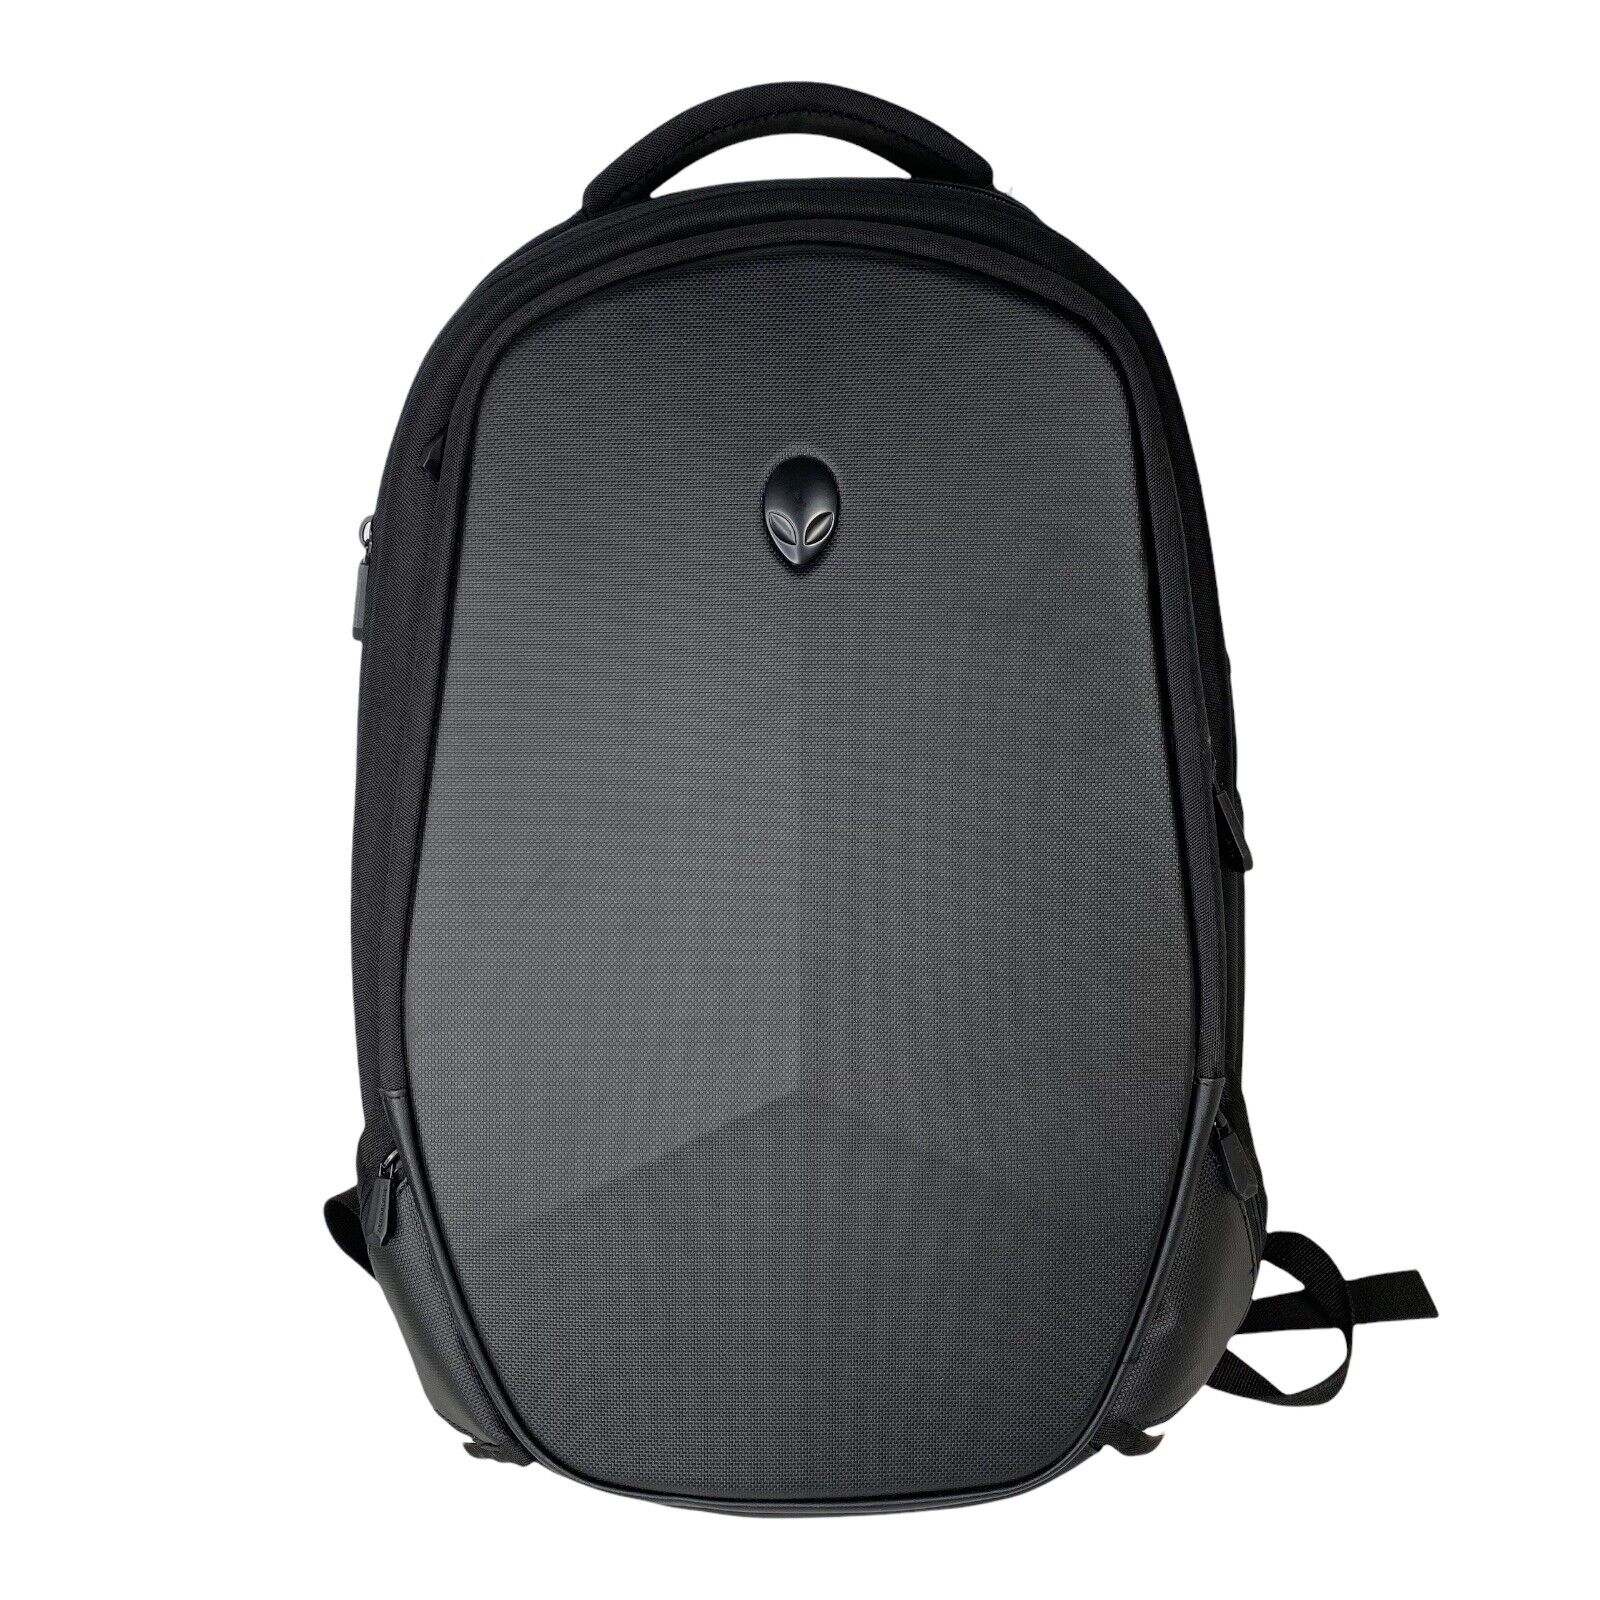 Alienware  Black Backpack Laptop Gaming Bag - 18" x 12"